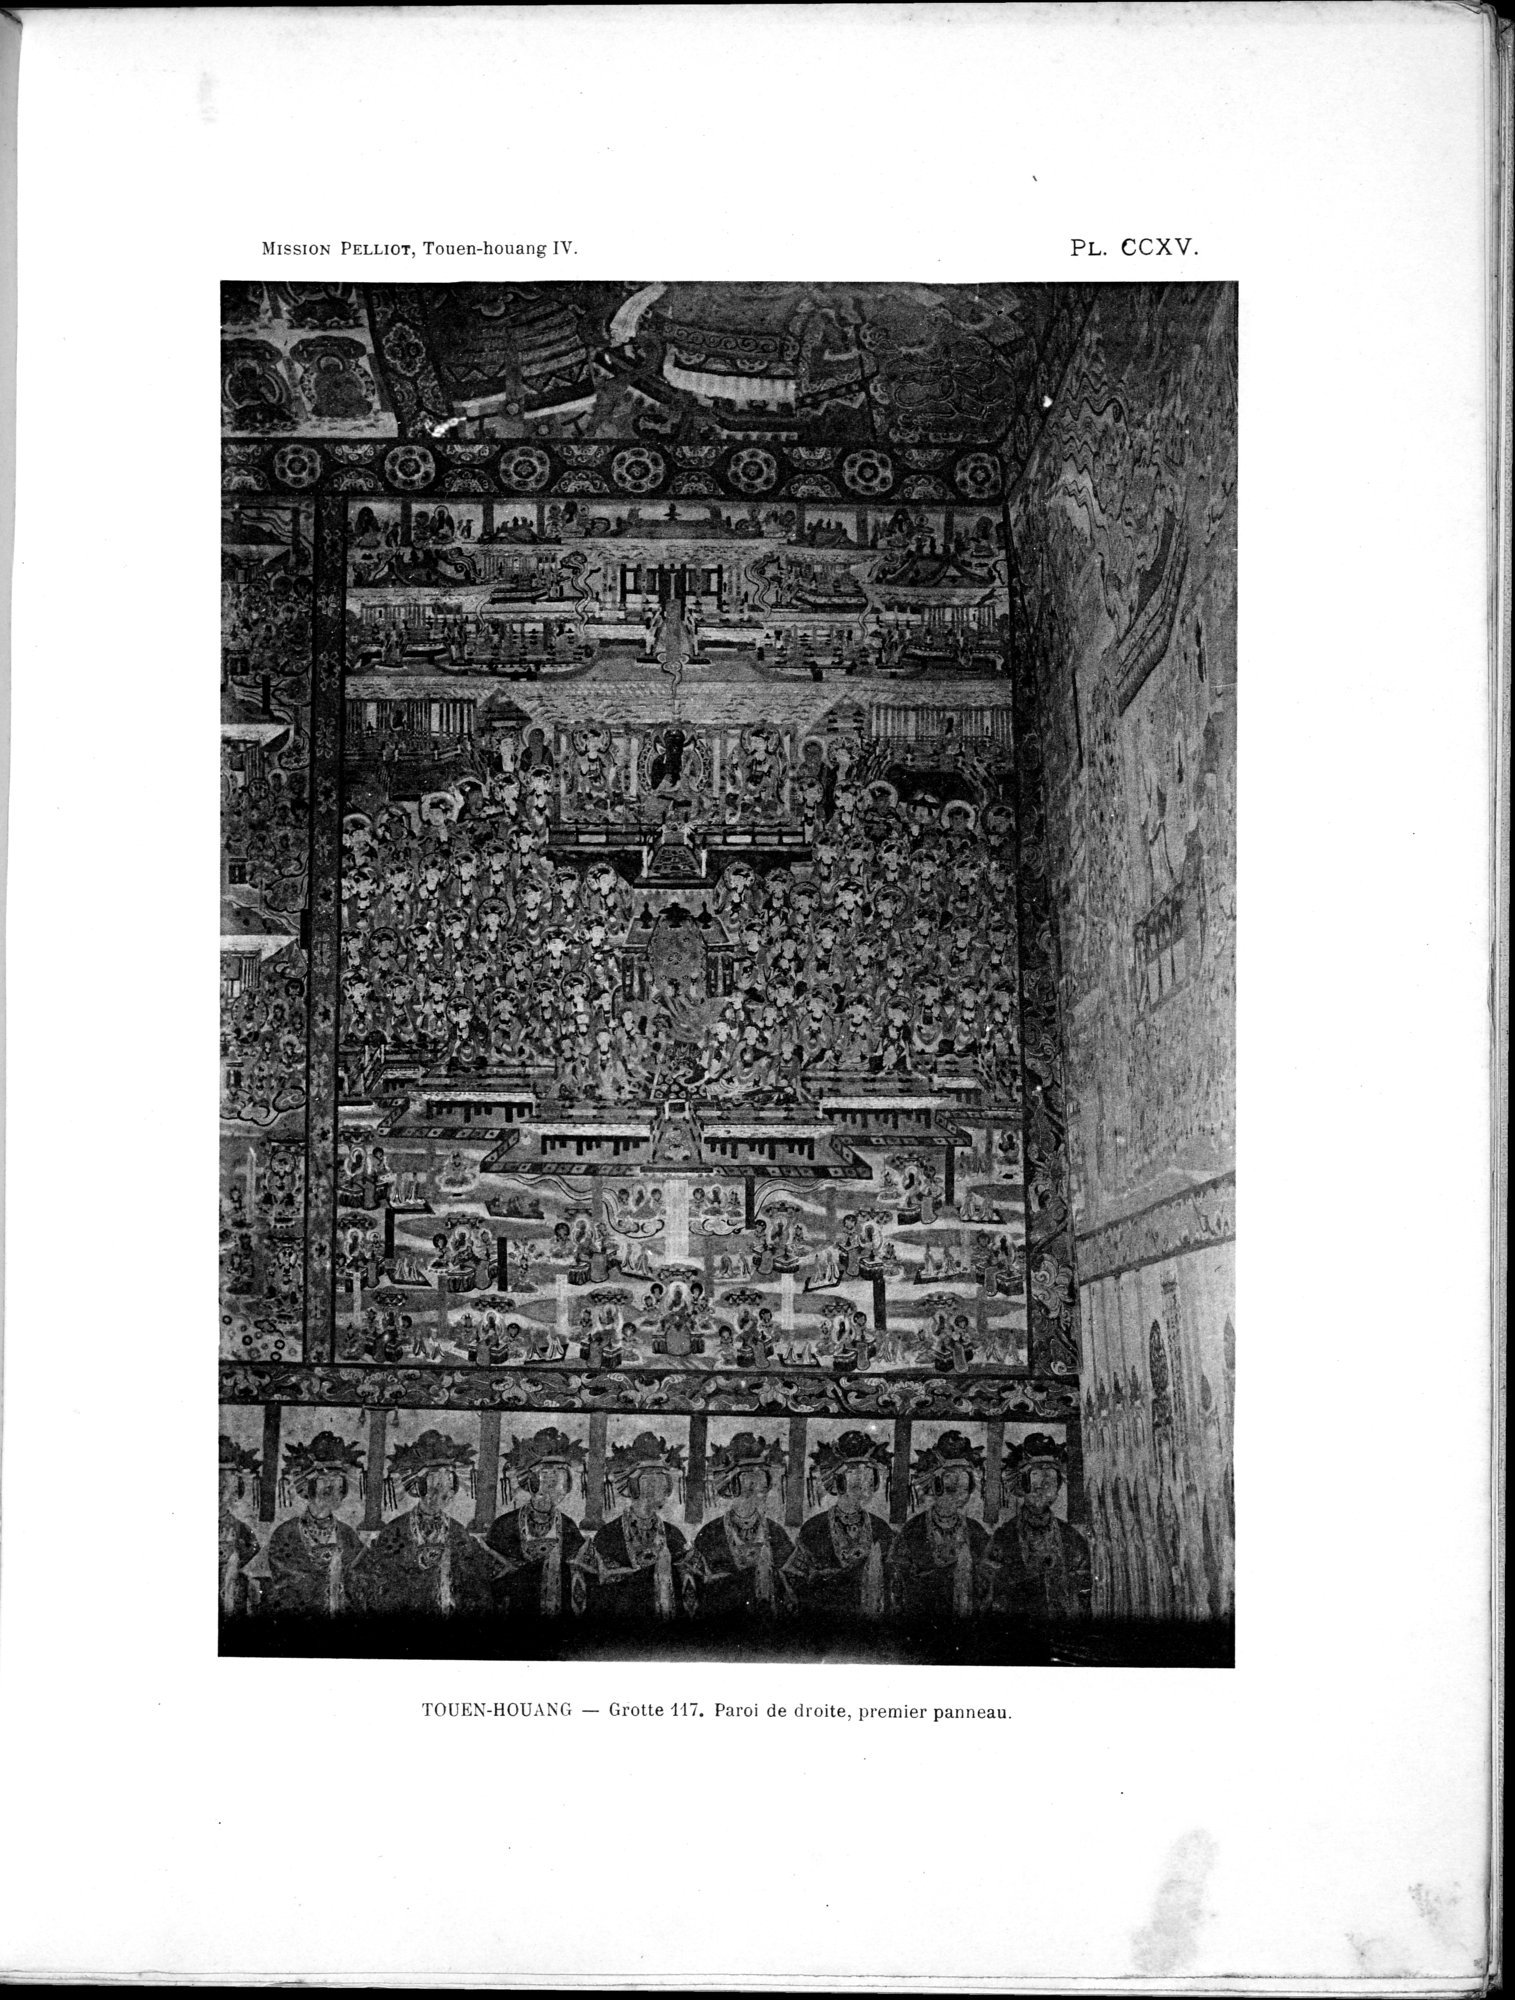 Les grottes de Touen-Houang : vol.4 / Page 55 (Grayscale High Resolution Image)